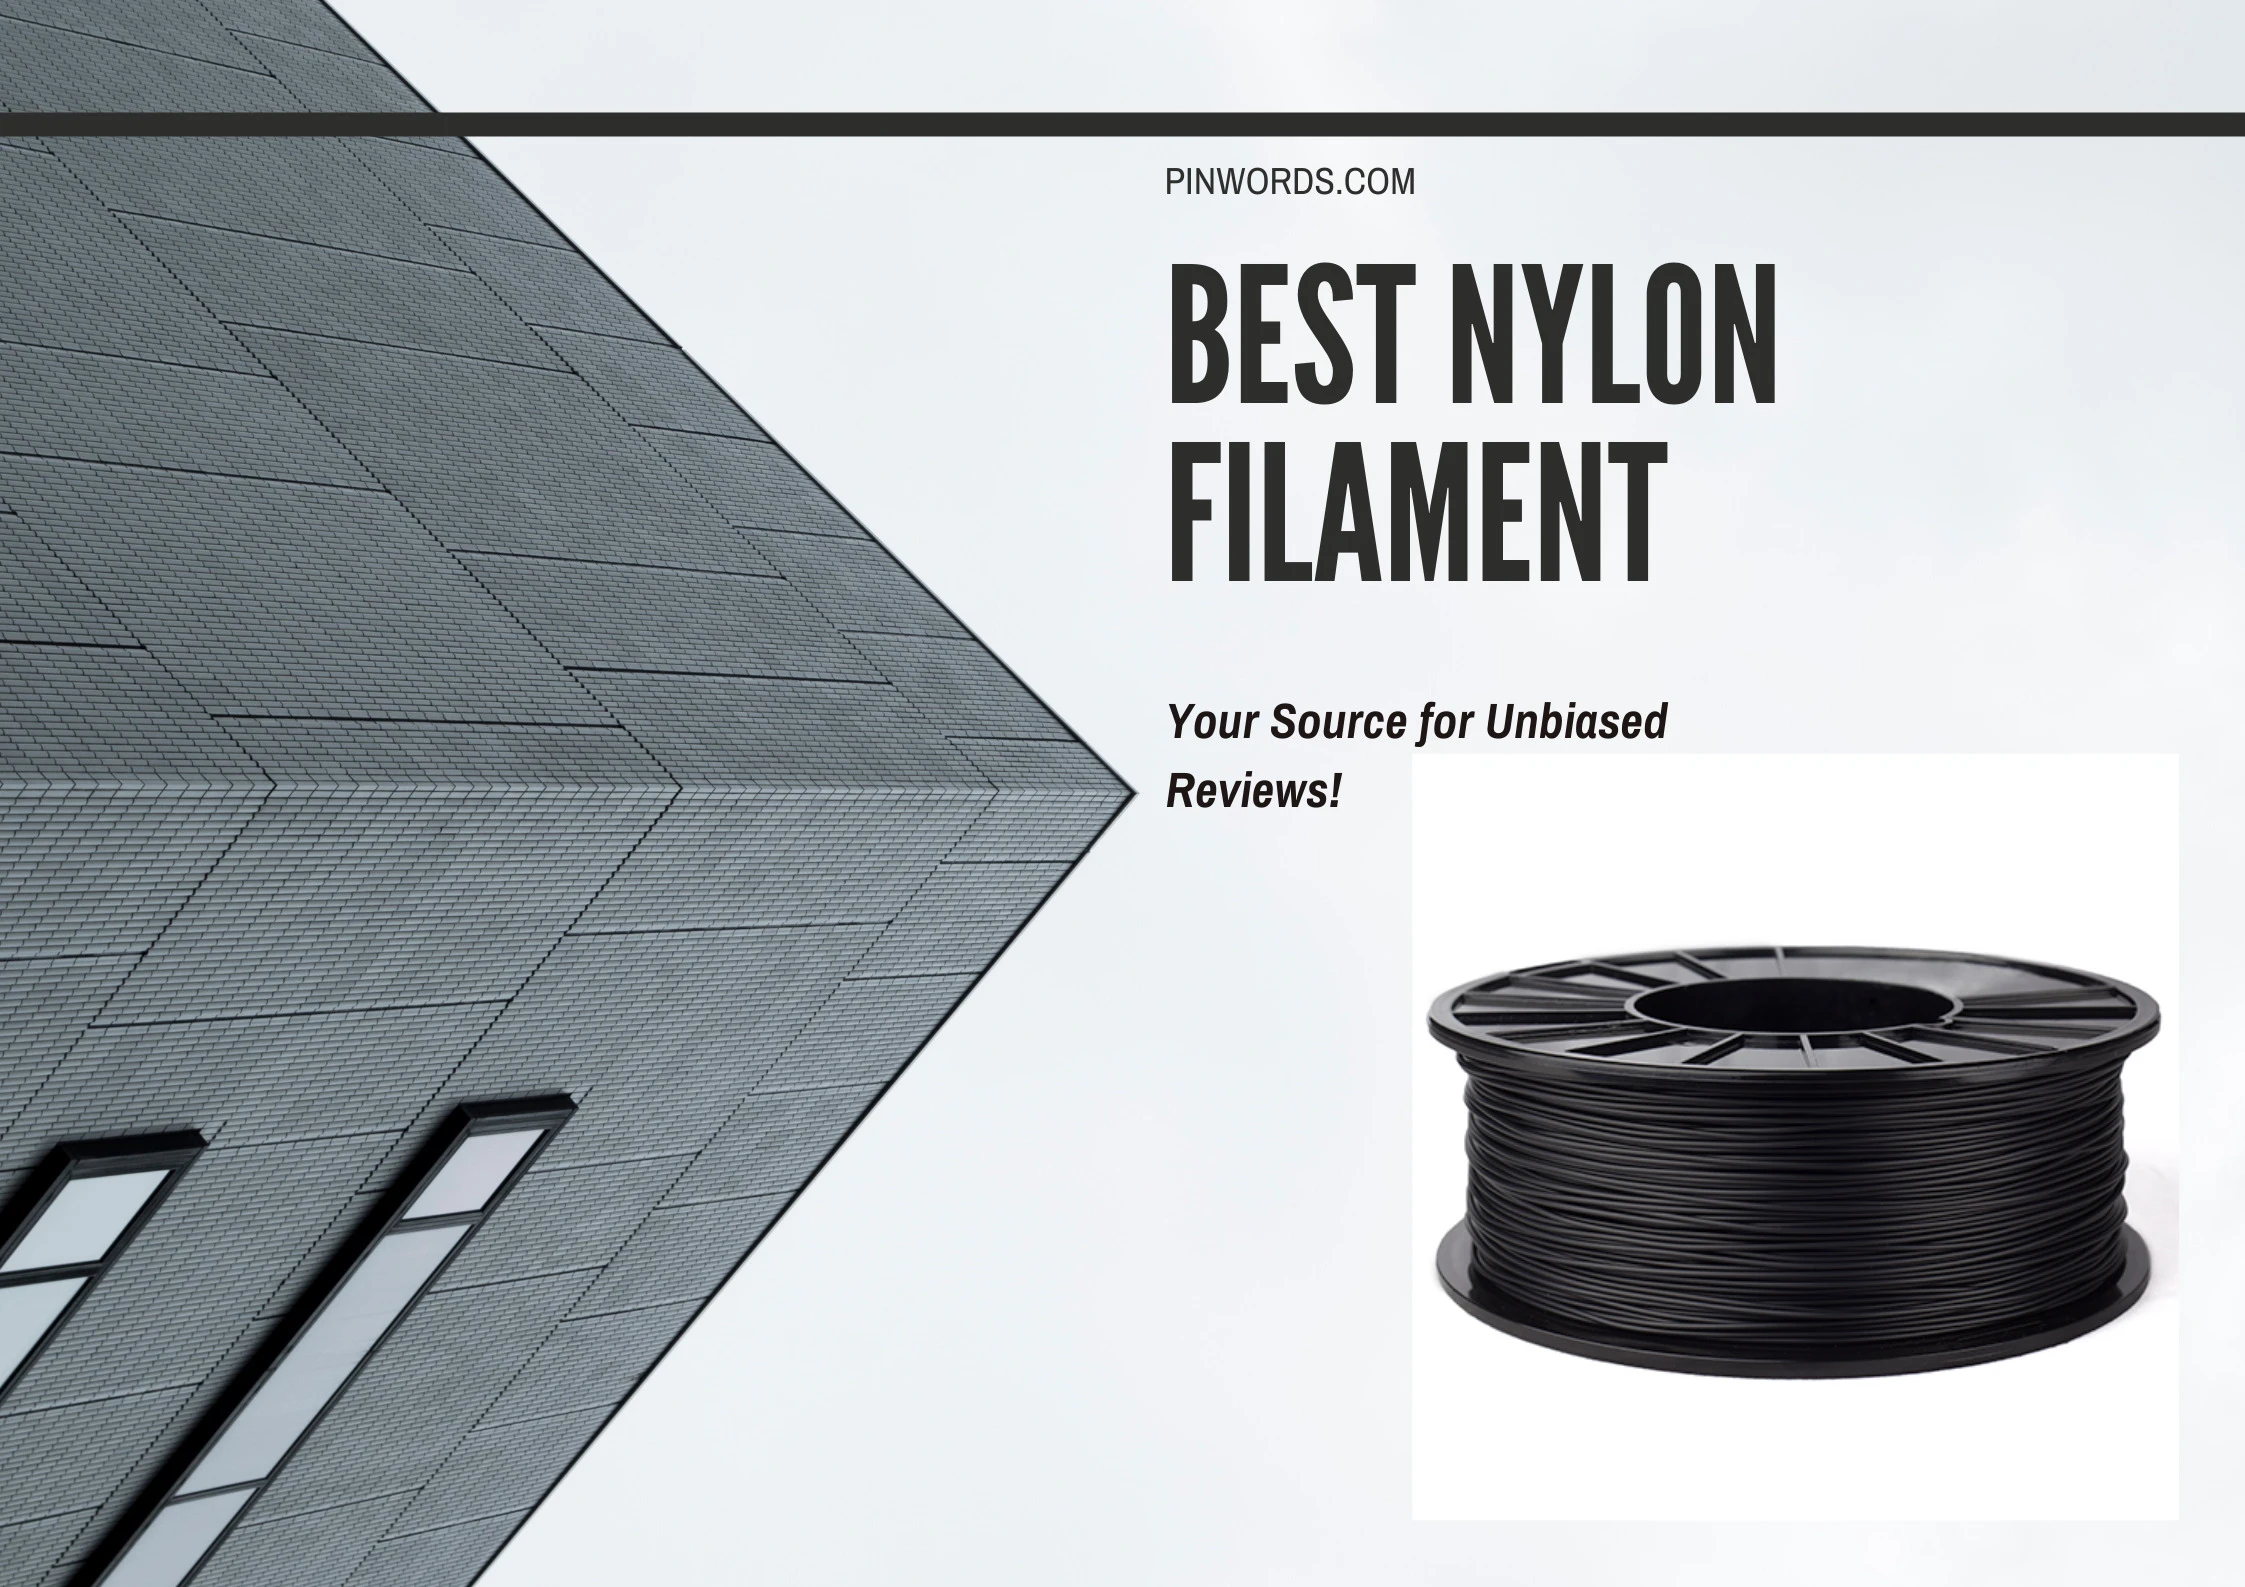  Top 5 Nylon Filament Reviews 